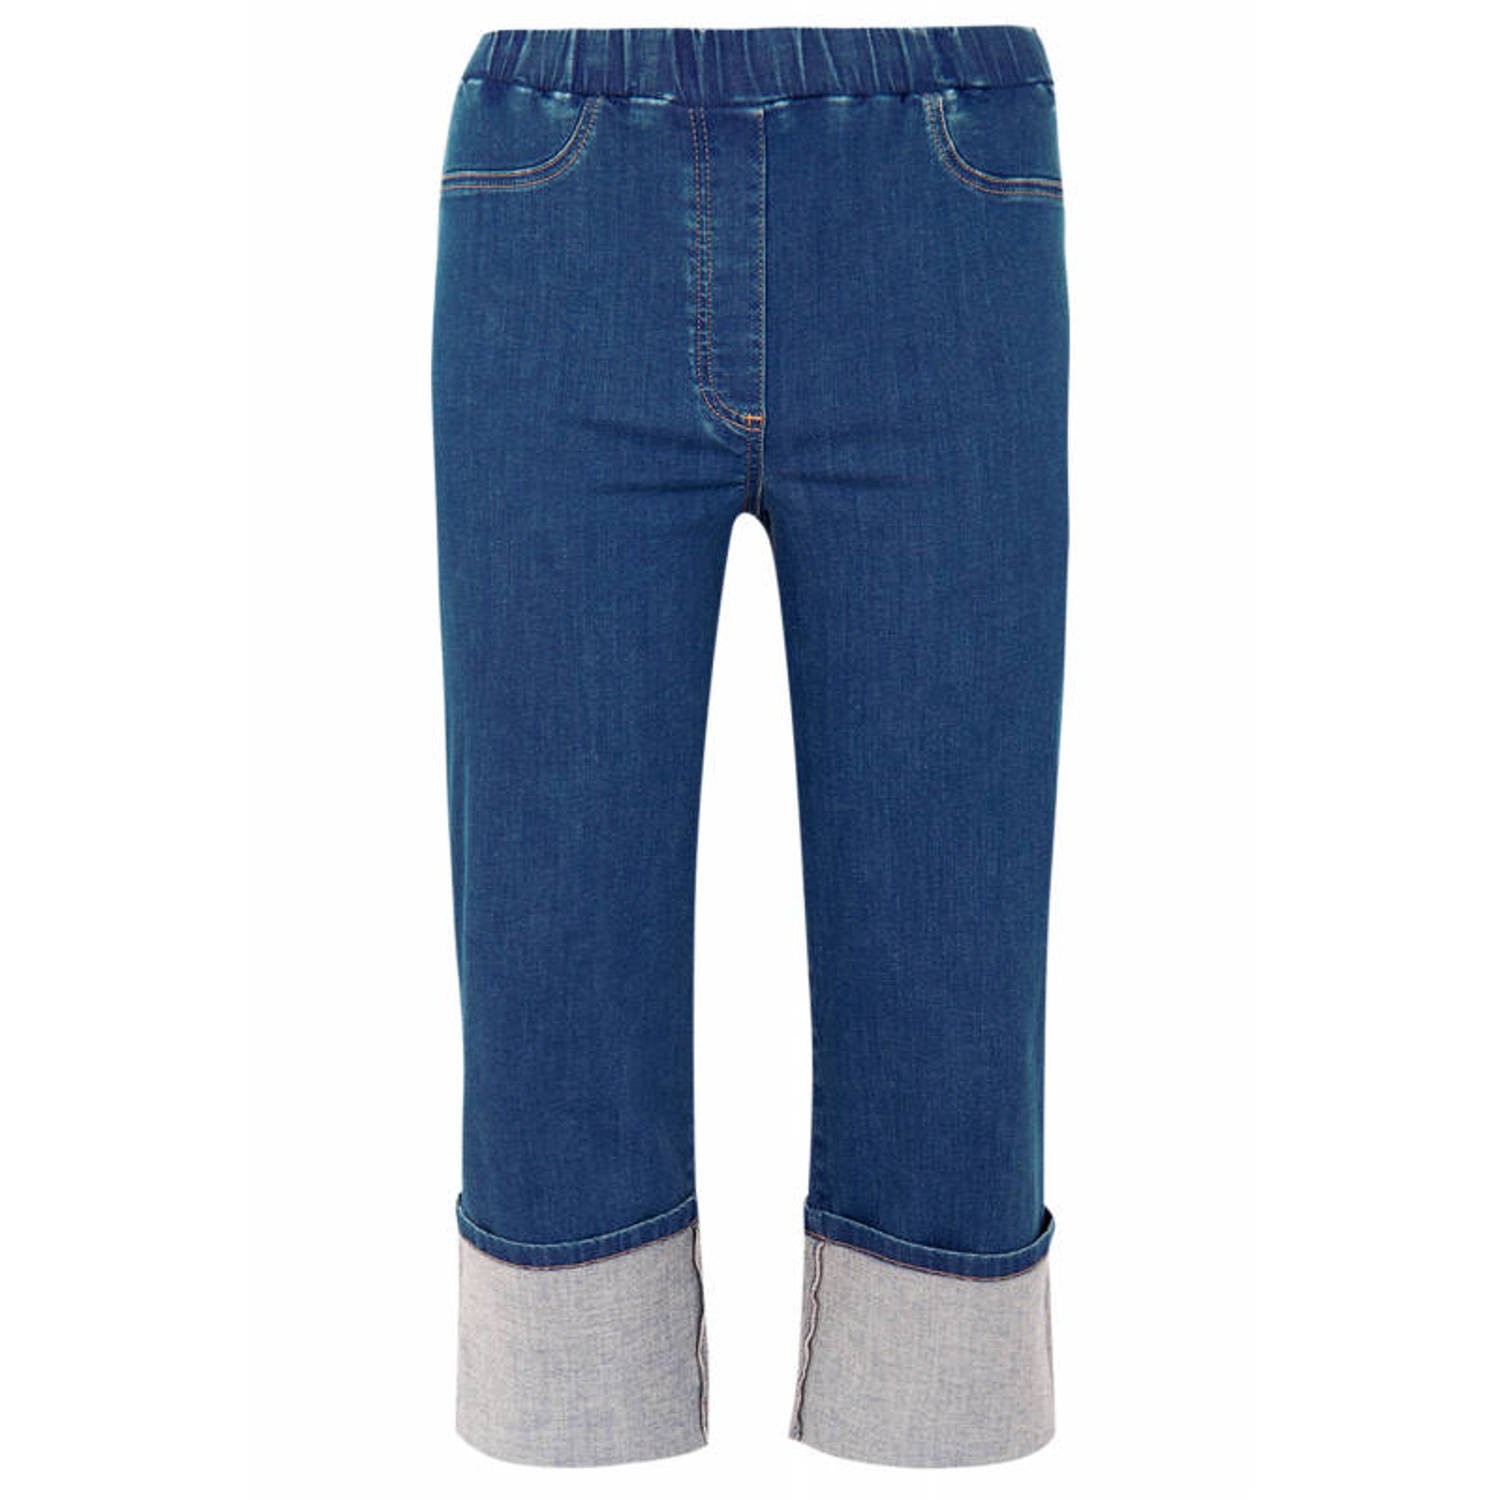 Yoek loose jeans medium blue denim